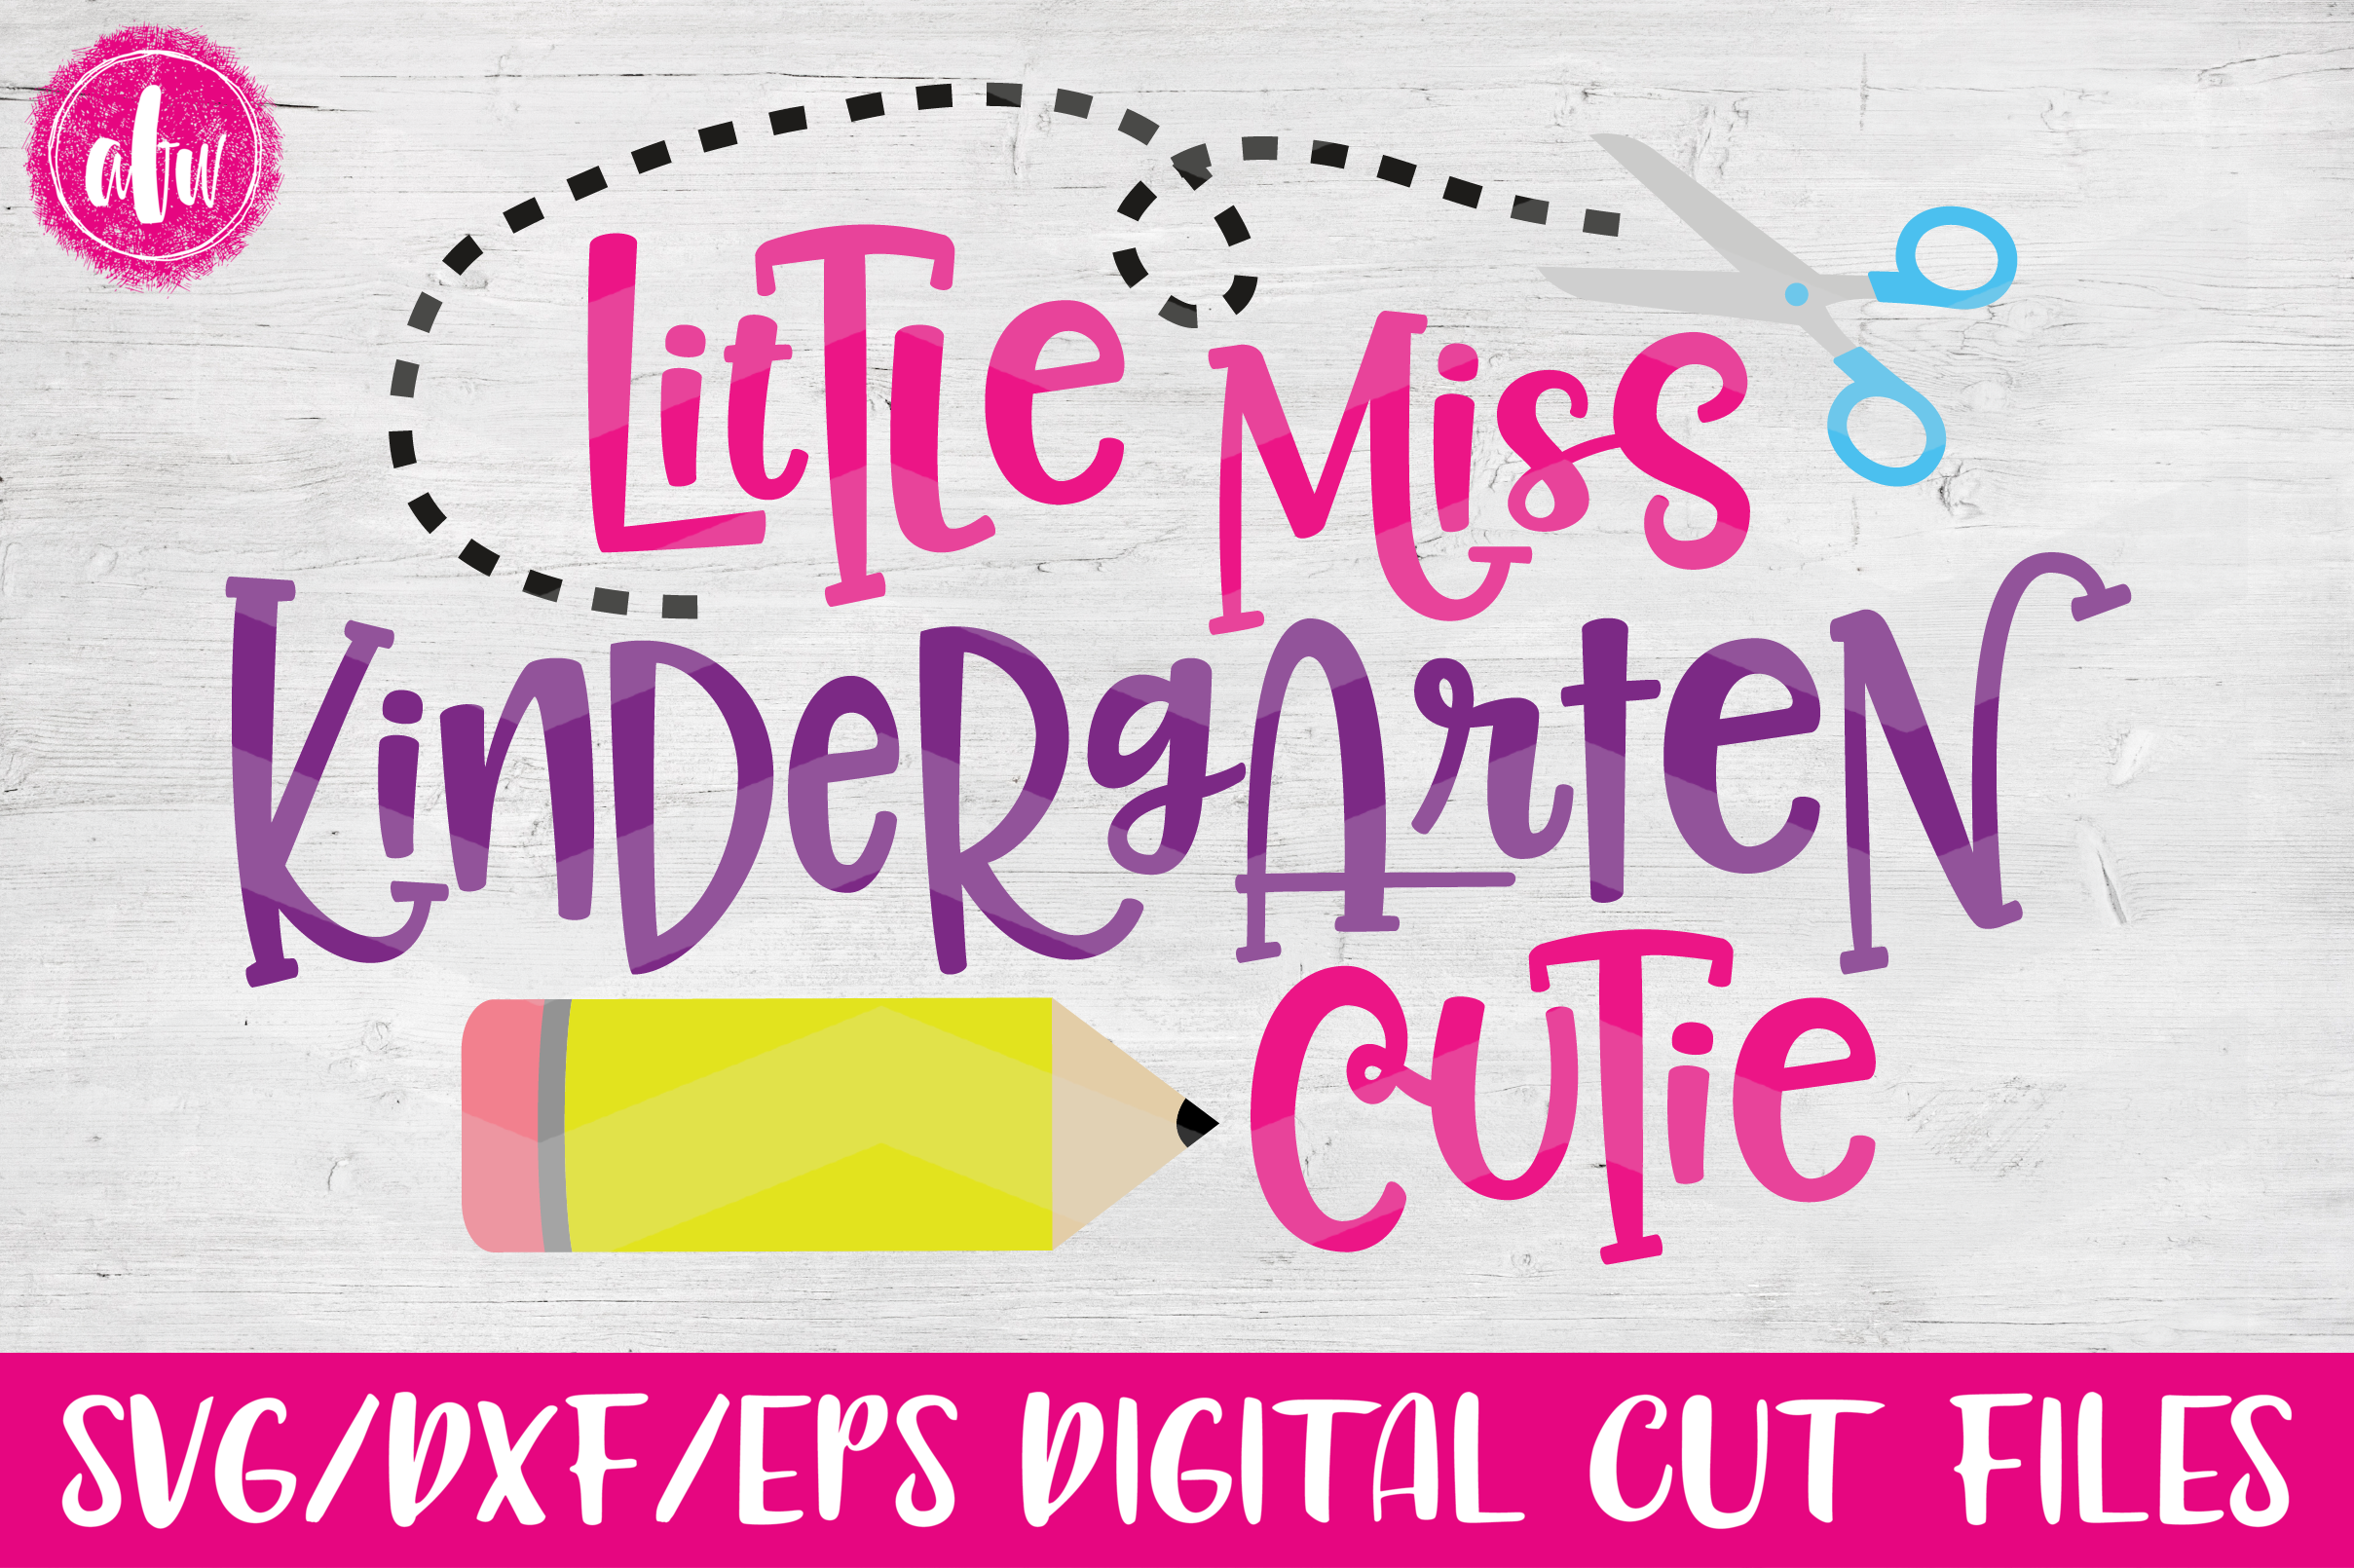 Download Lil Miss Kindergarten Cutie- SVG, DXF, EPS Cut Files ...